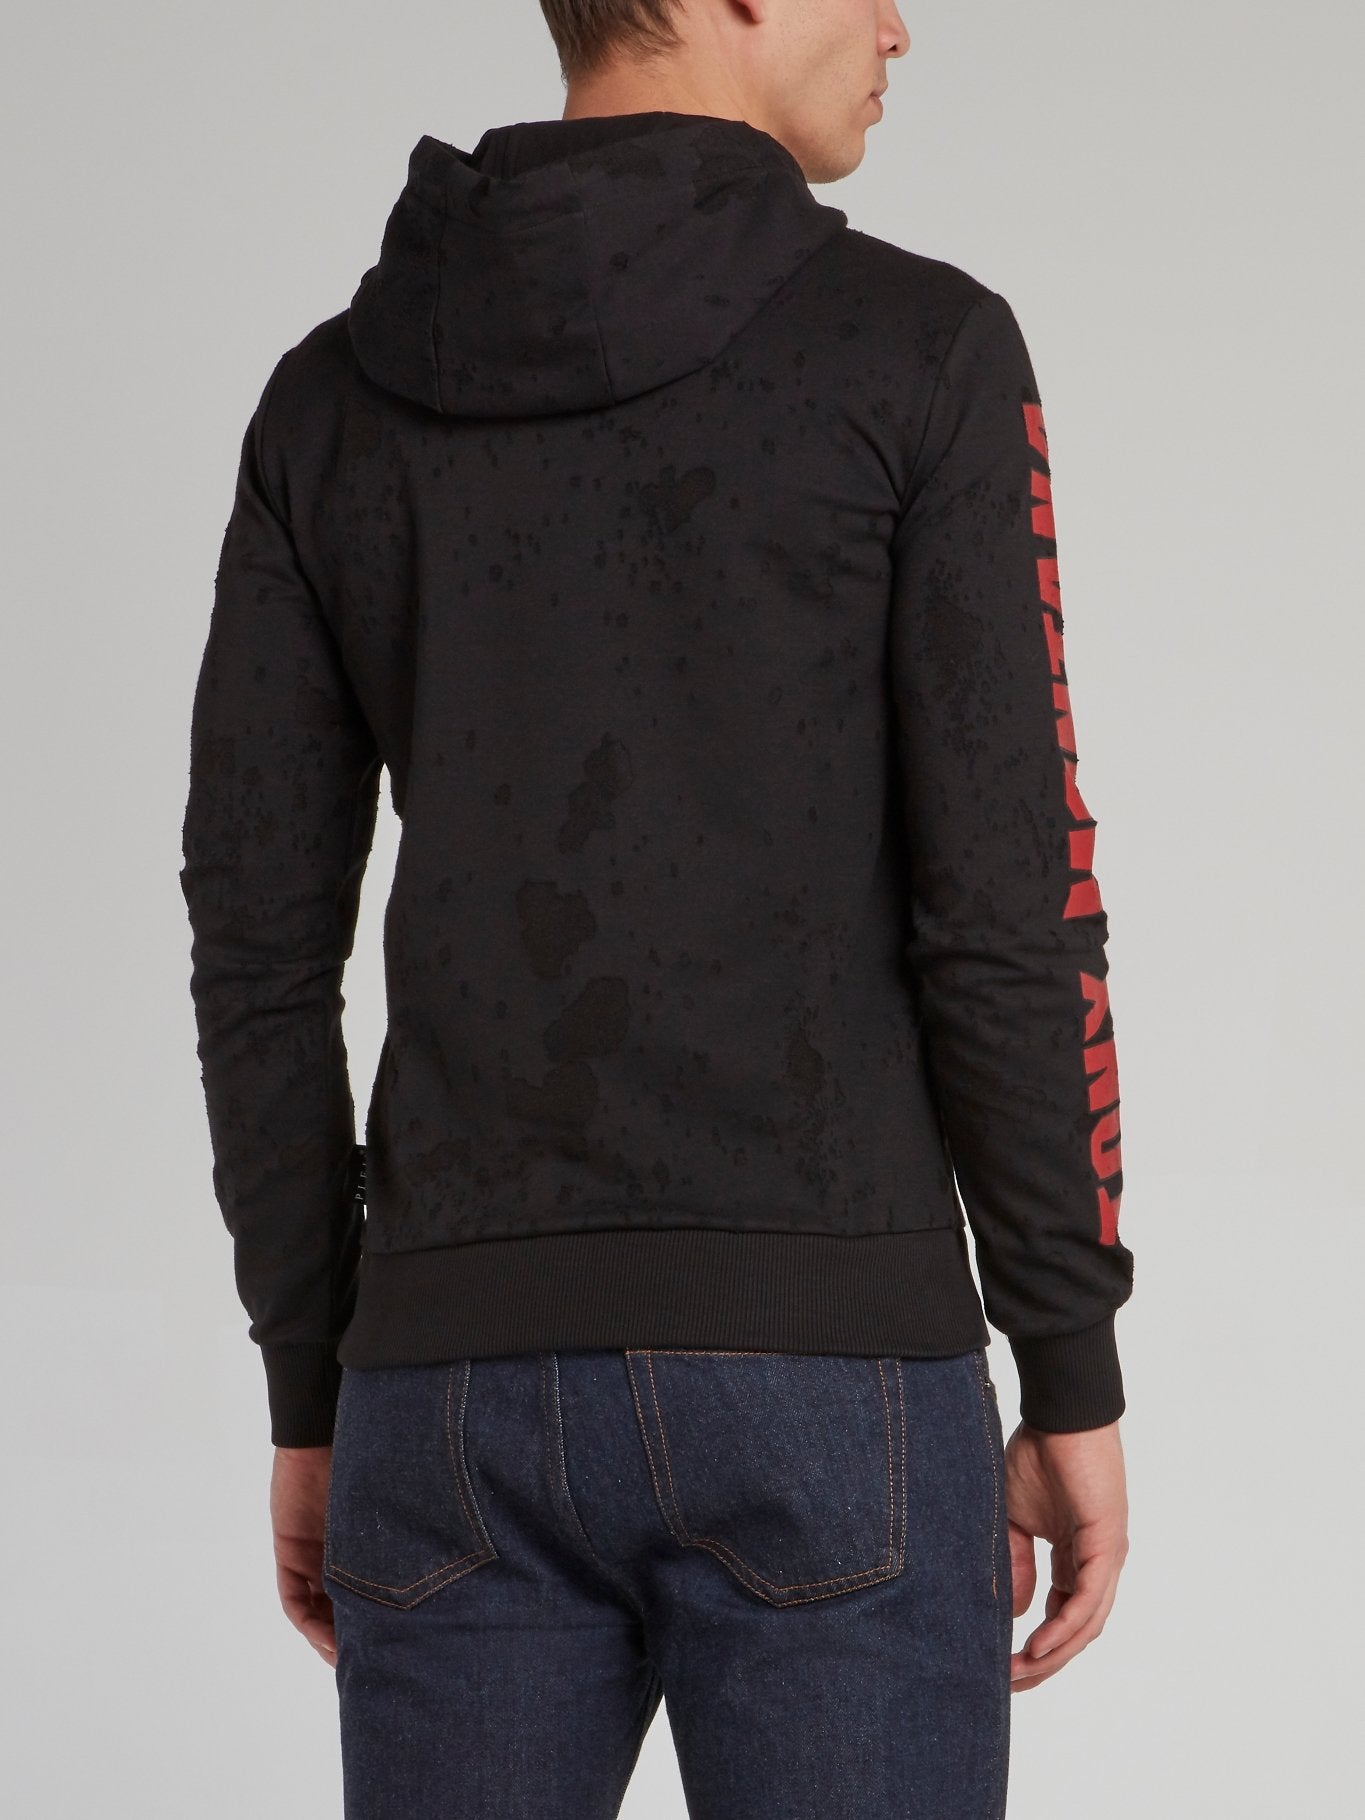 Scarface Black Distressed Graphic Sweatshirt